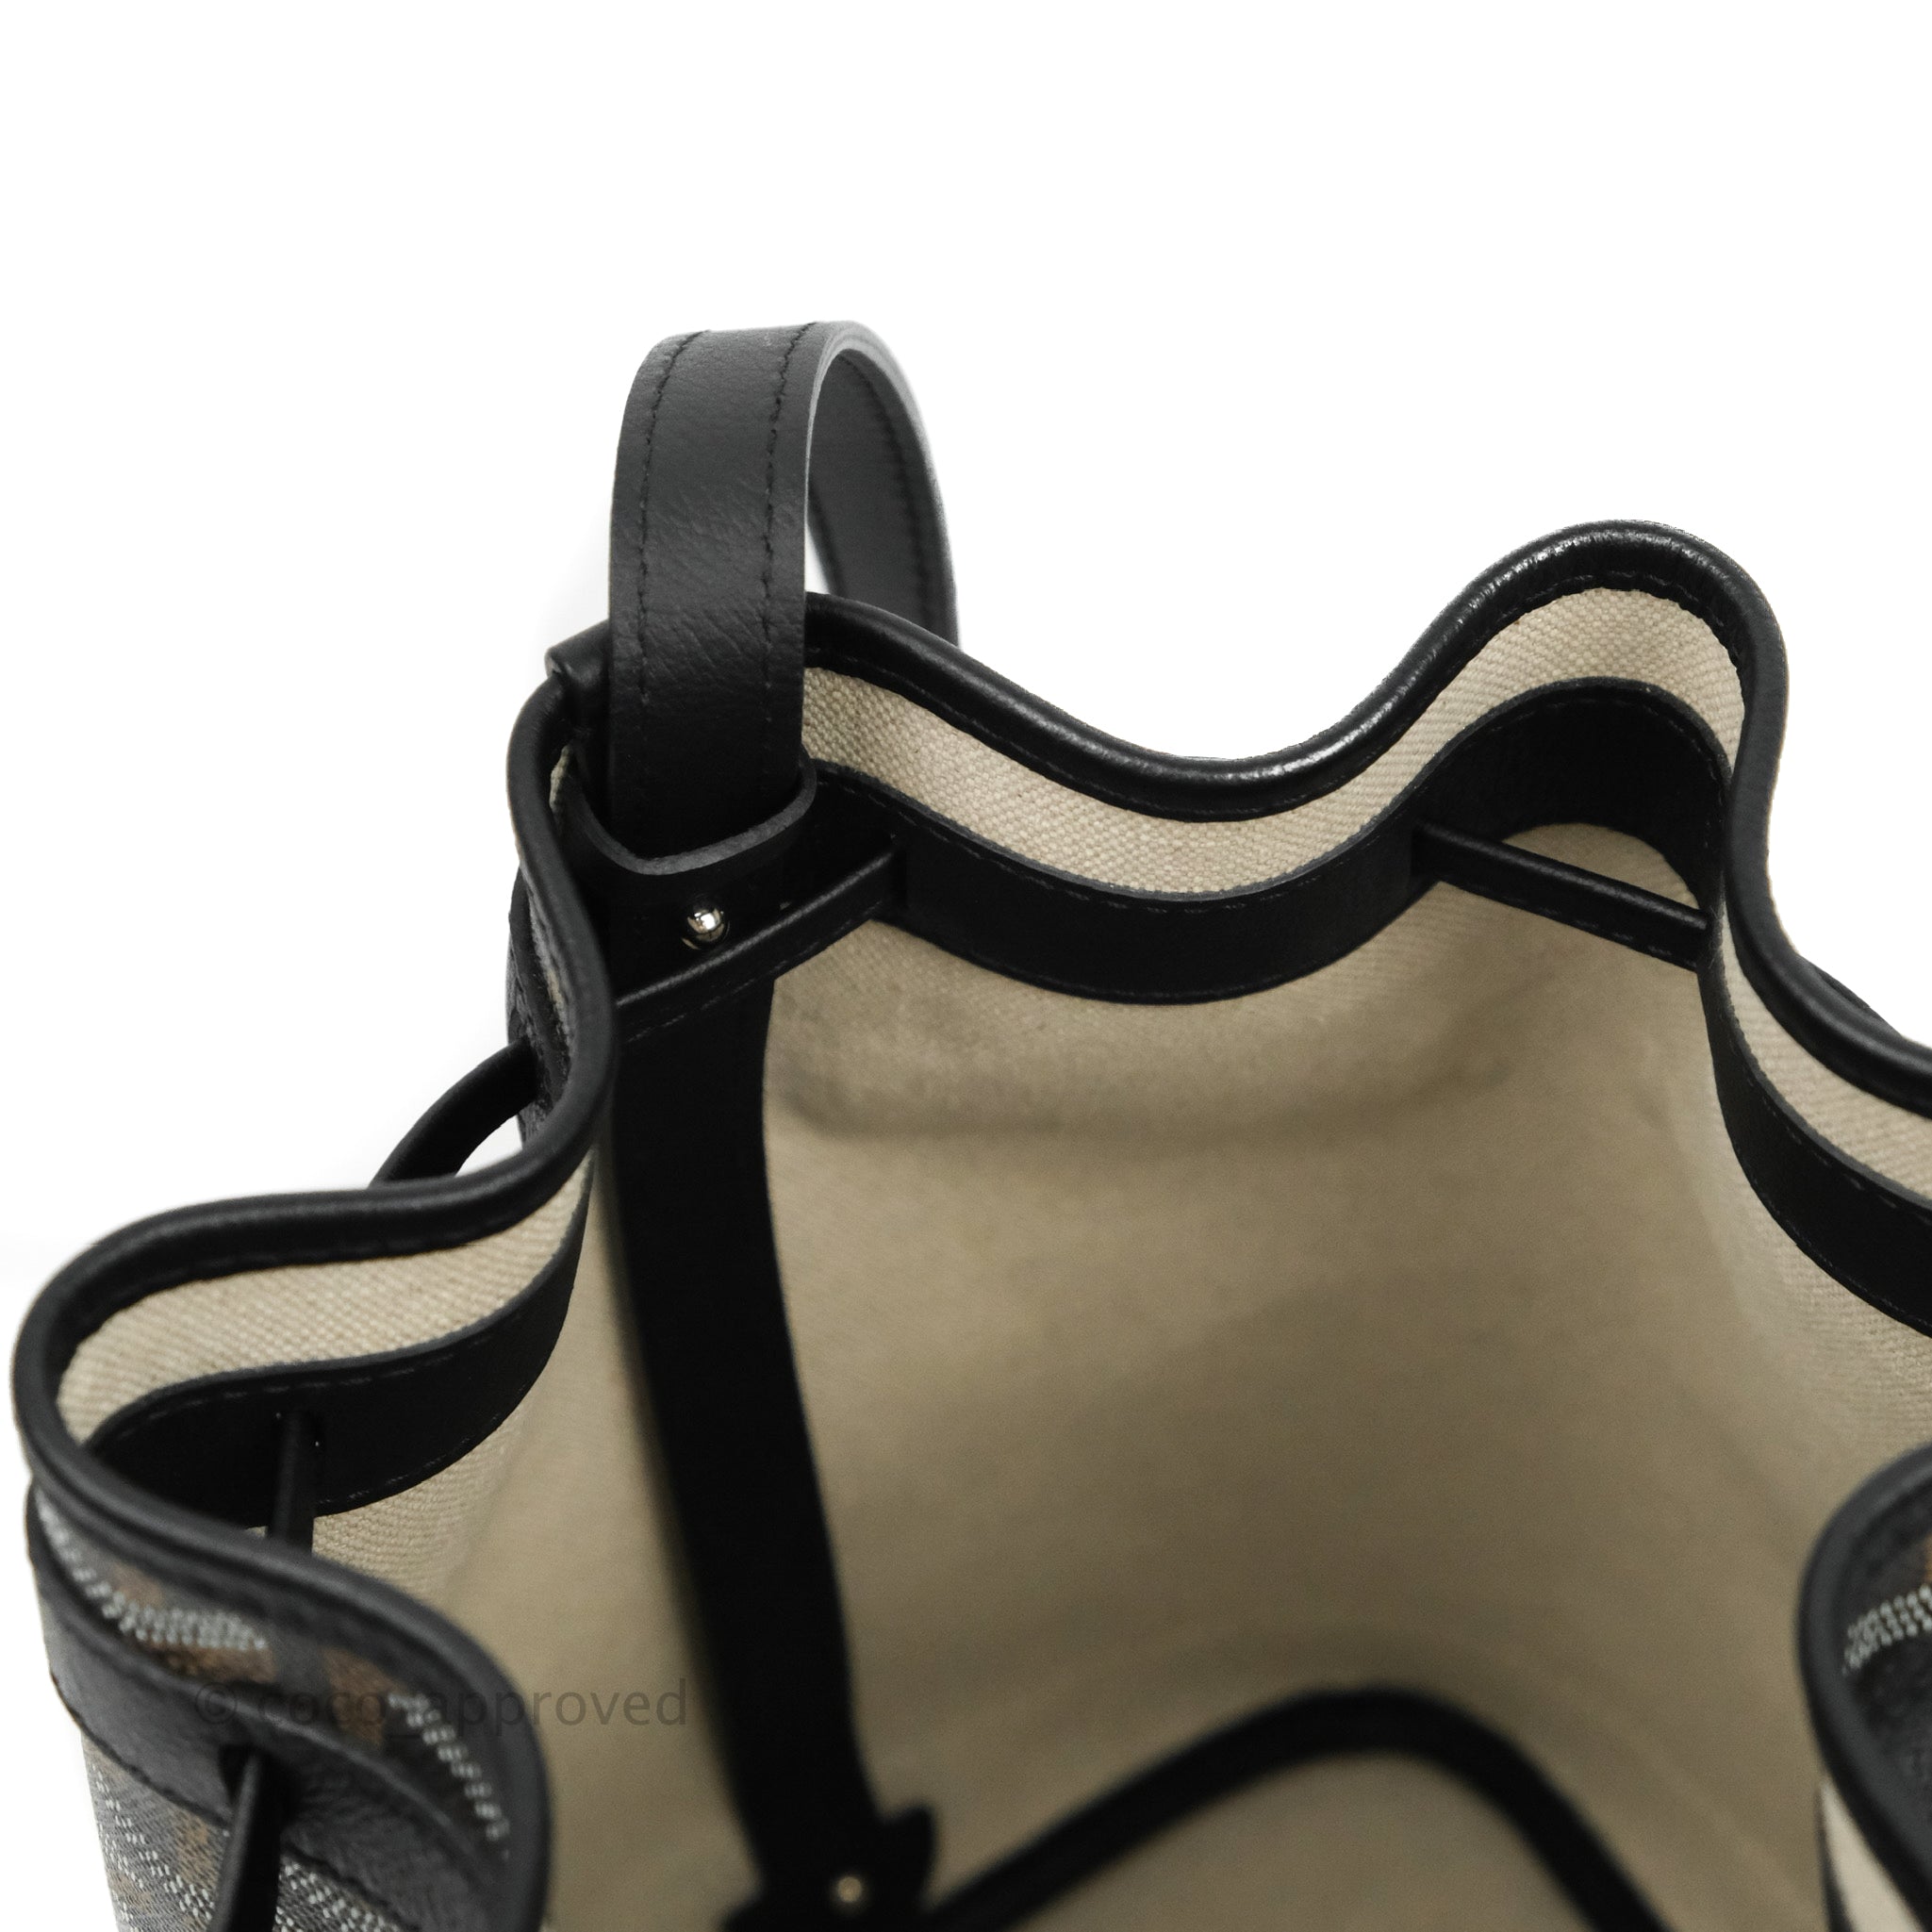 Goyard Petit Flot Black & Natural Drawstring Bucket Bag – Coco